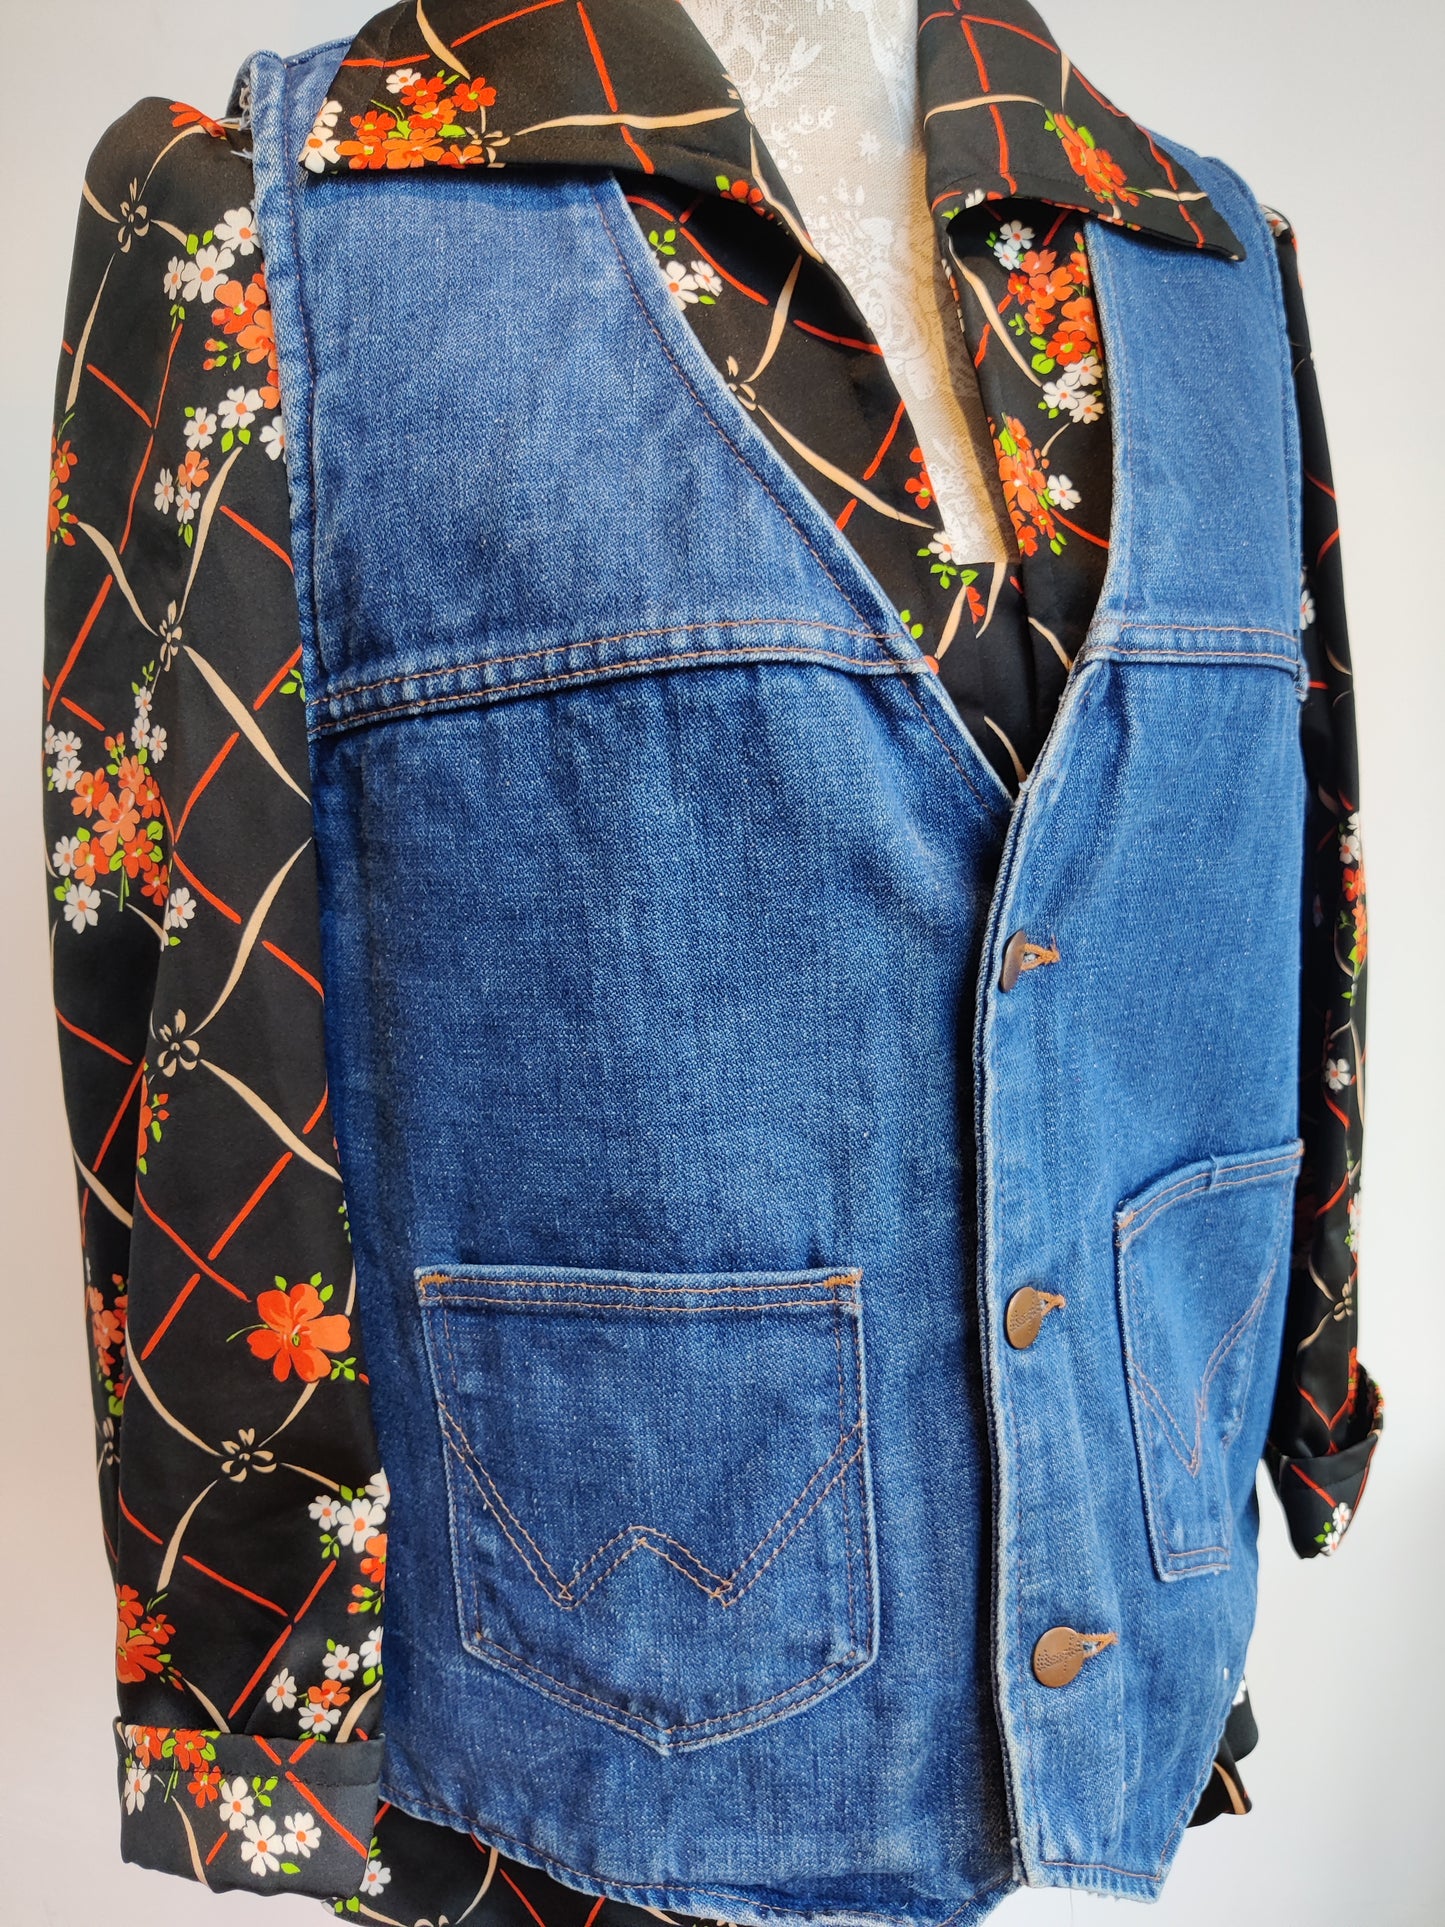 Vintage denim jacket with shearling lining.